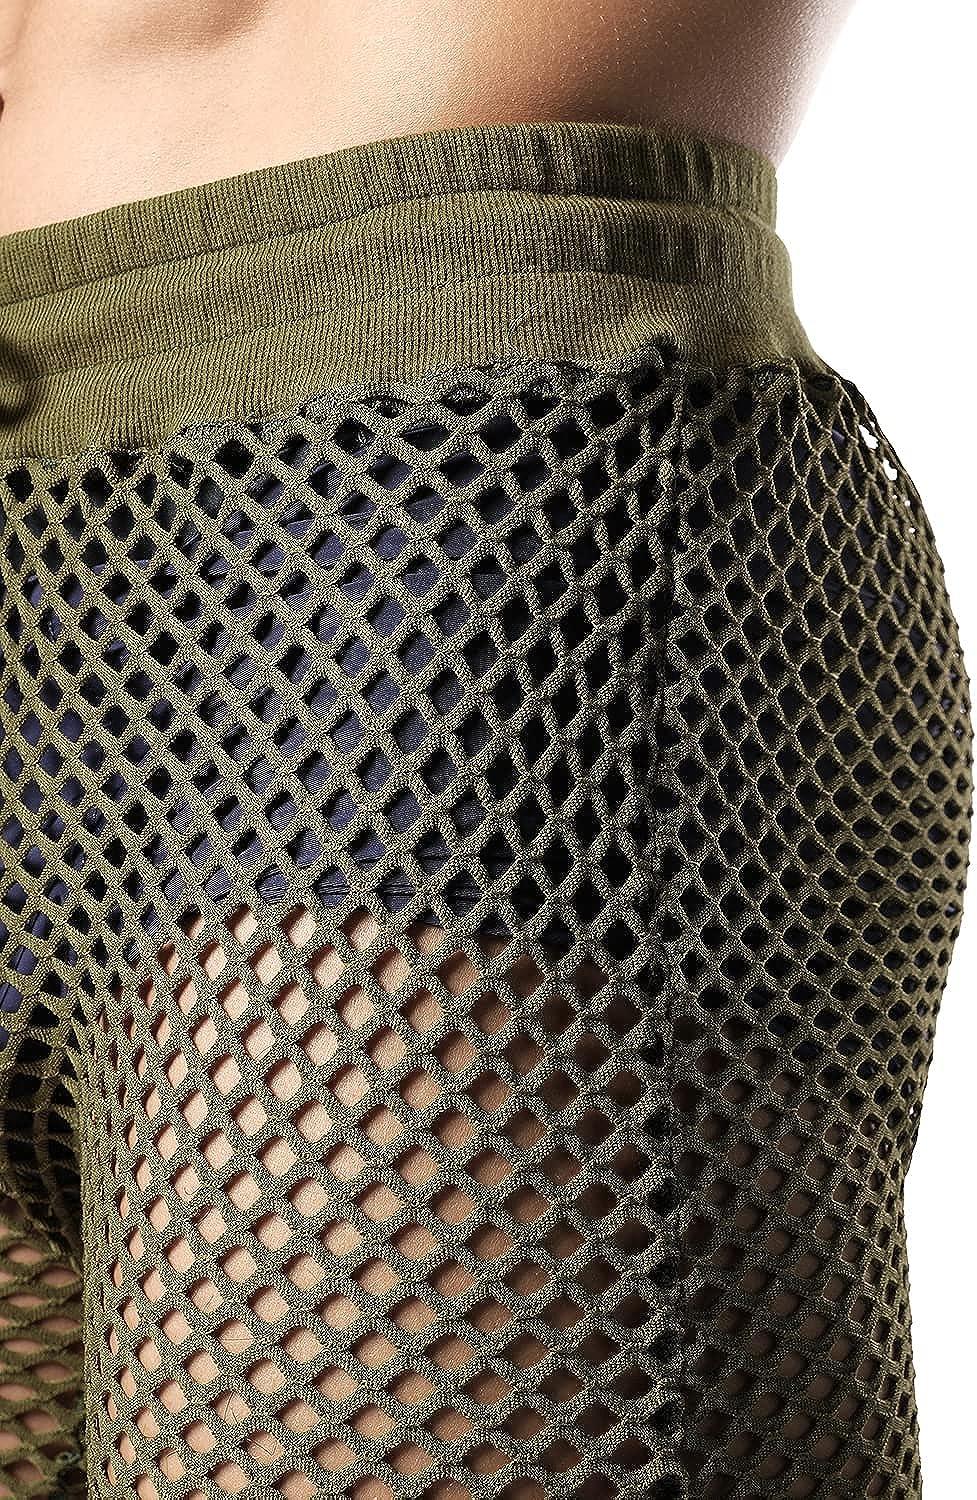 JOGAL Men's Mesh Fishnet See Through Pants Stretchy Muscle Leggings  Armygreen Medium